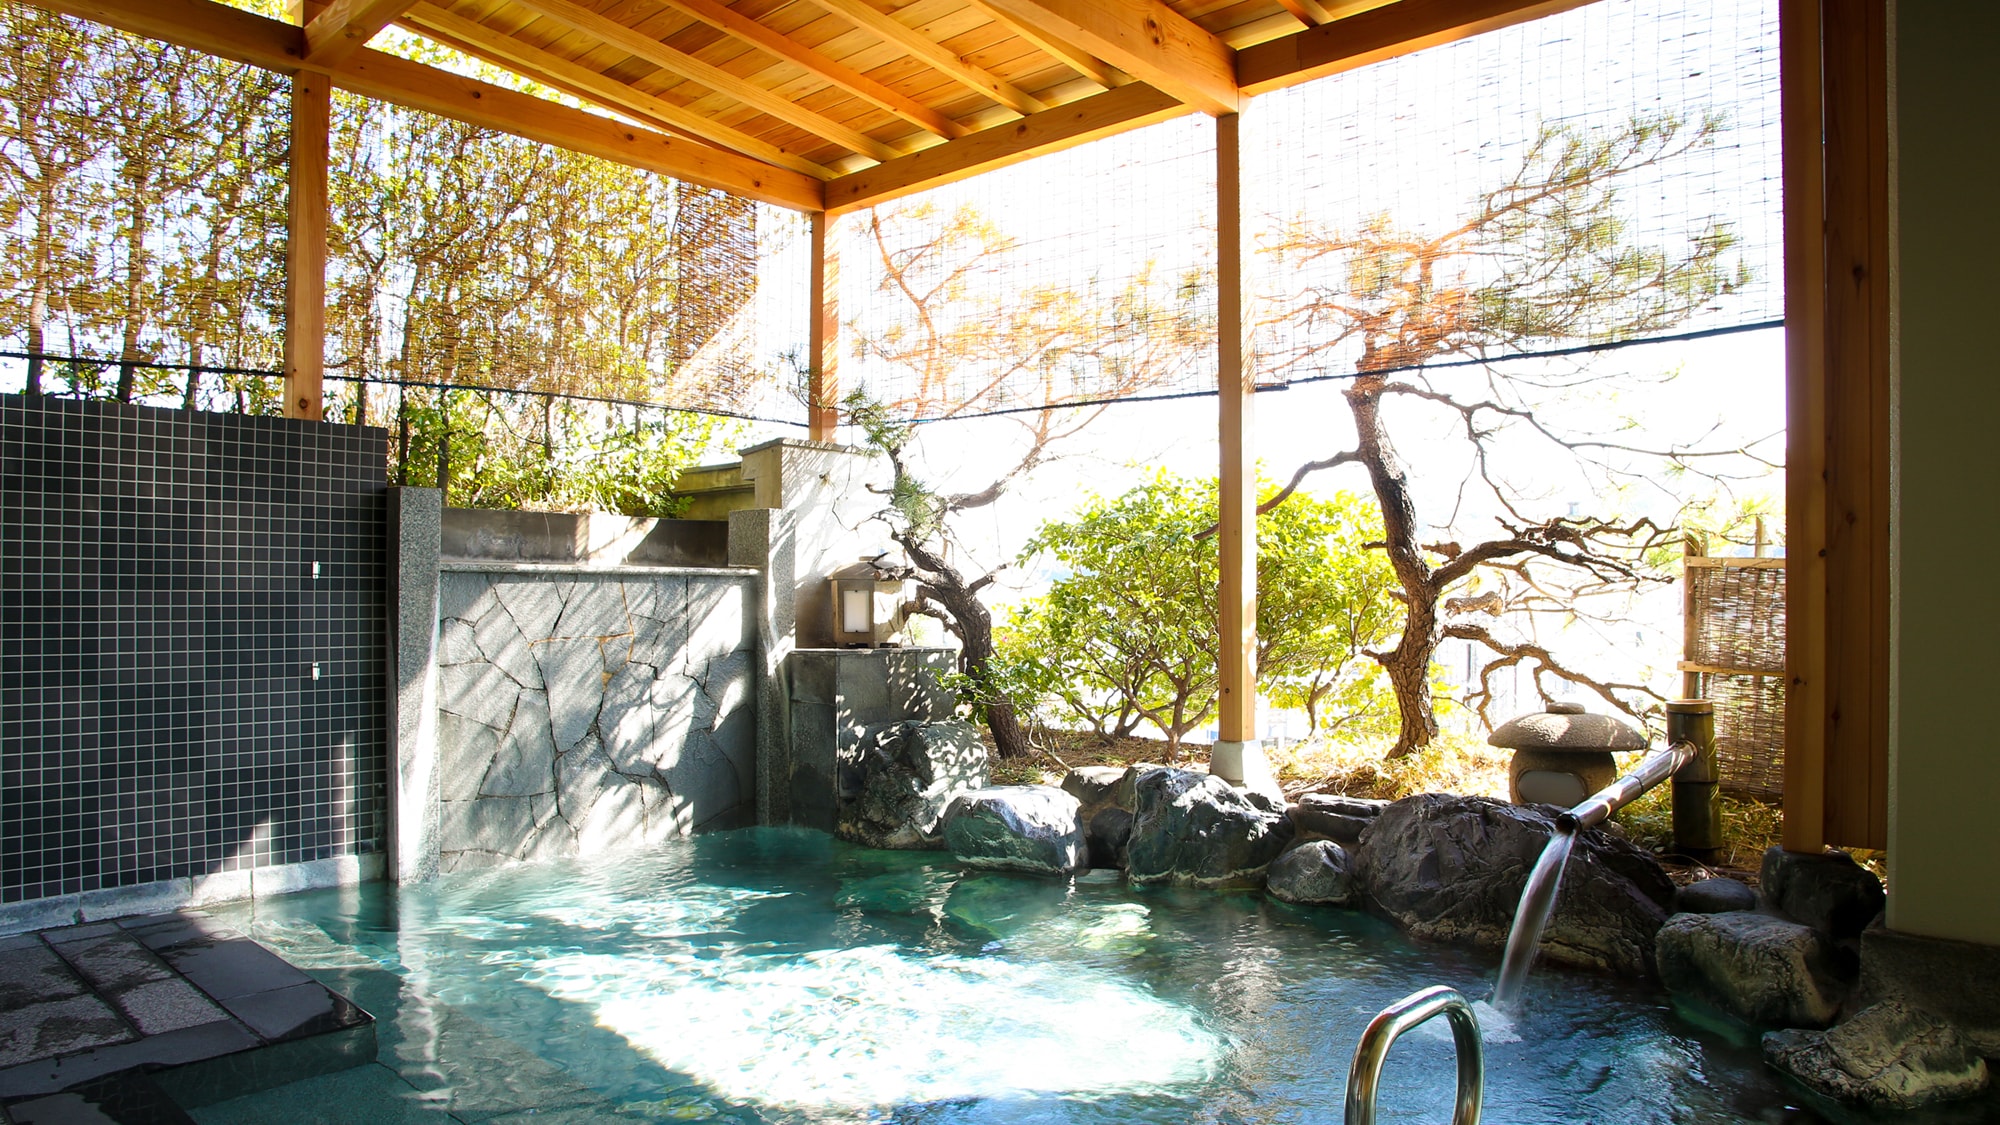 ◆ Open-air bath "Shoyo". Open-air bath / large communal bath renewed in January 2017